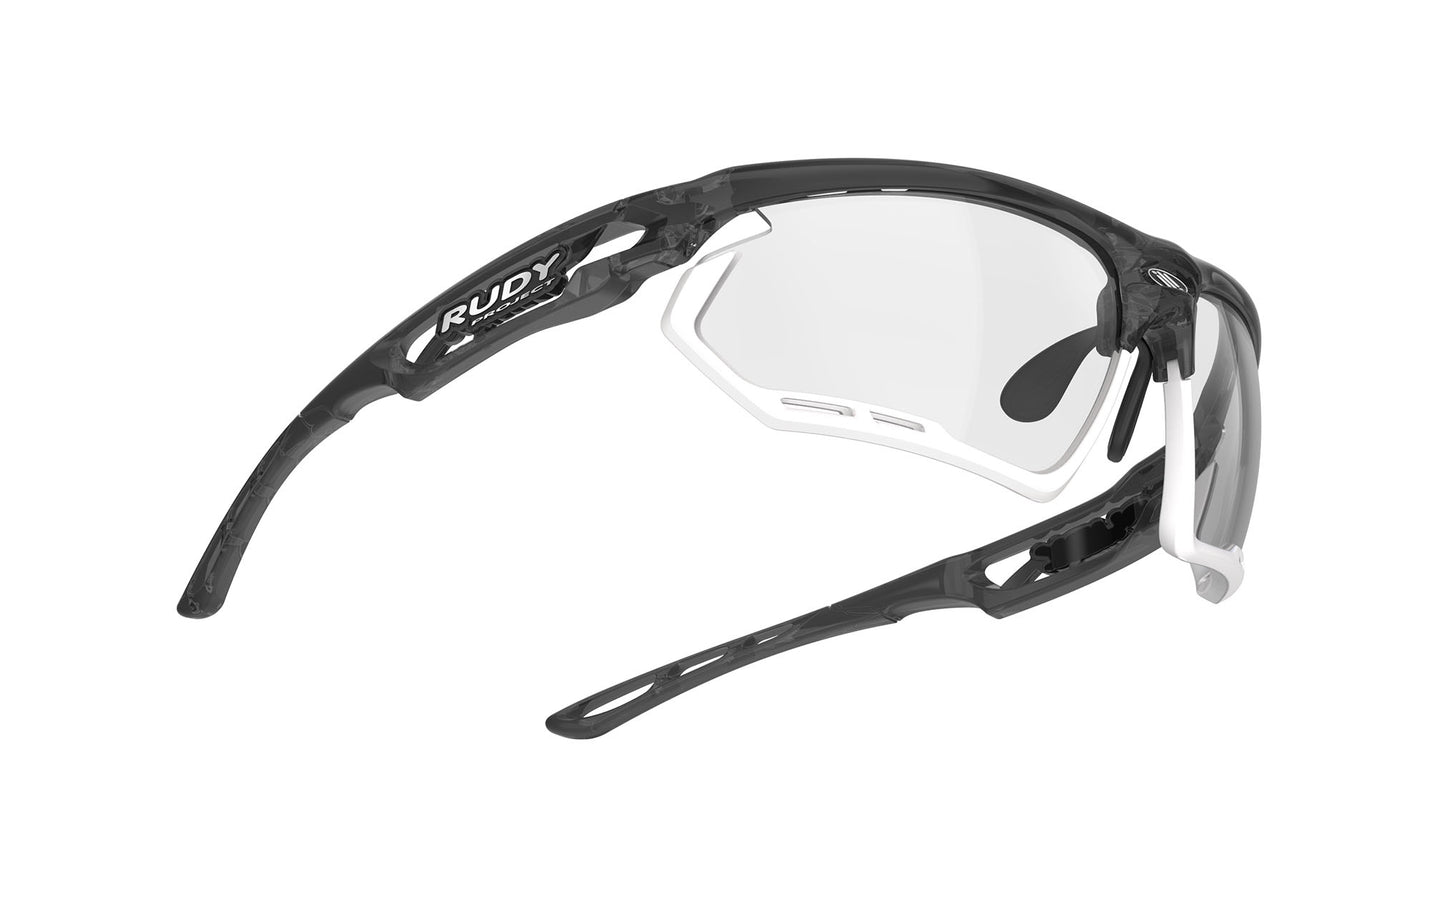 Rudy Project Fotonyk Crystal Graphite - Impactx Photochromic 2 Black Sunglasses